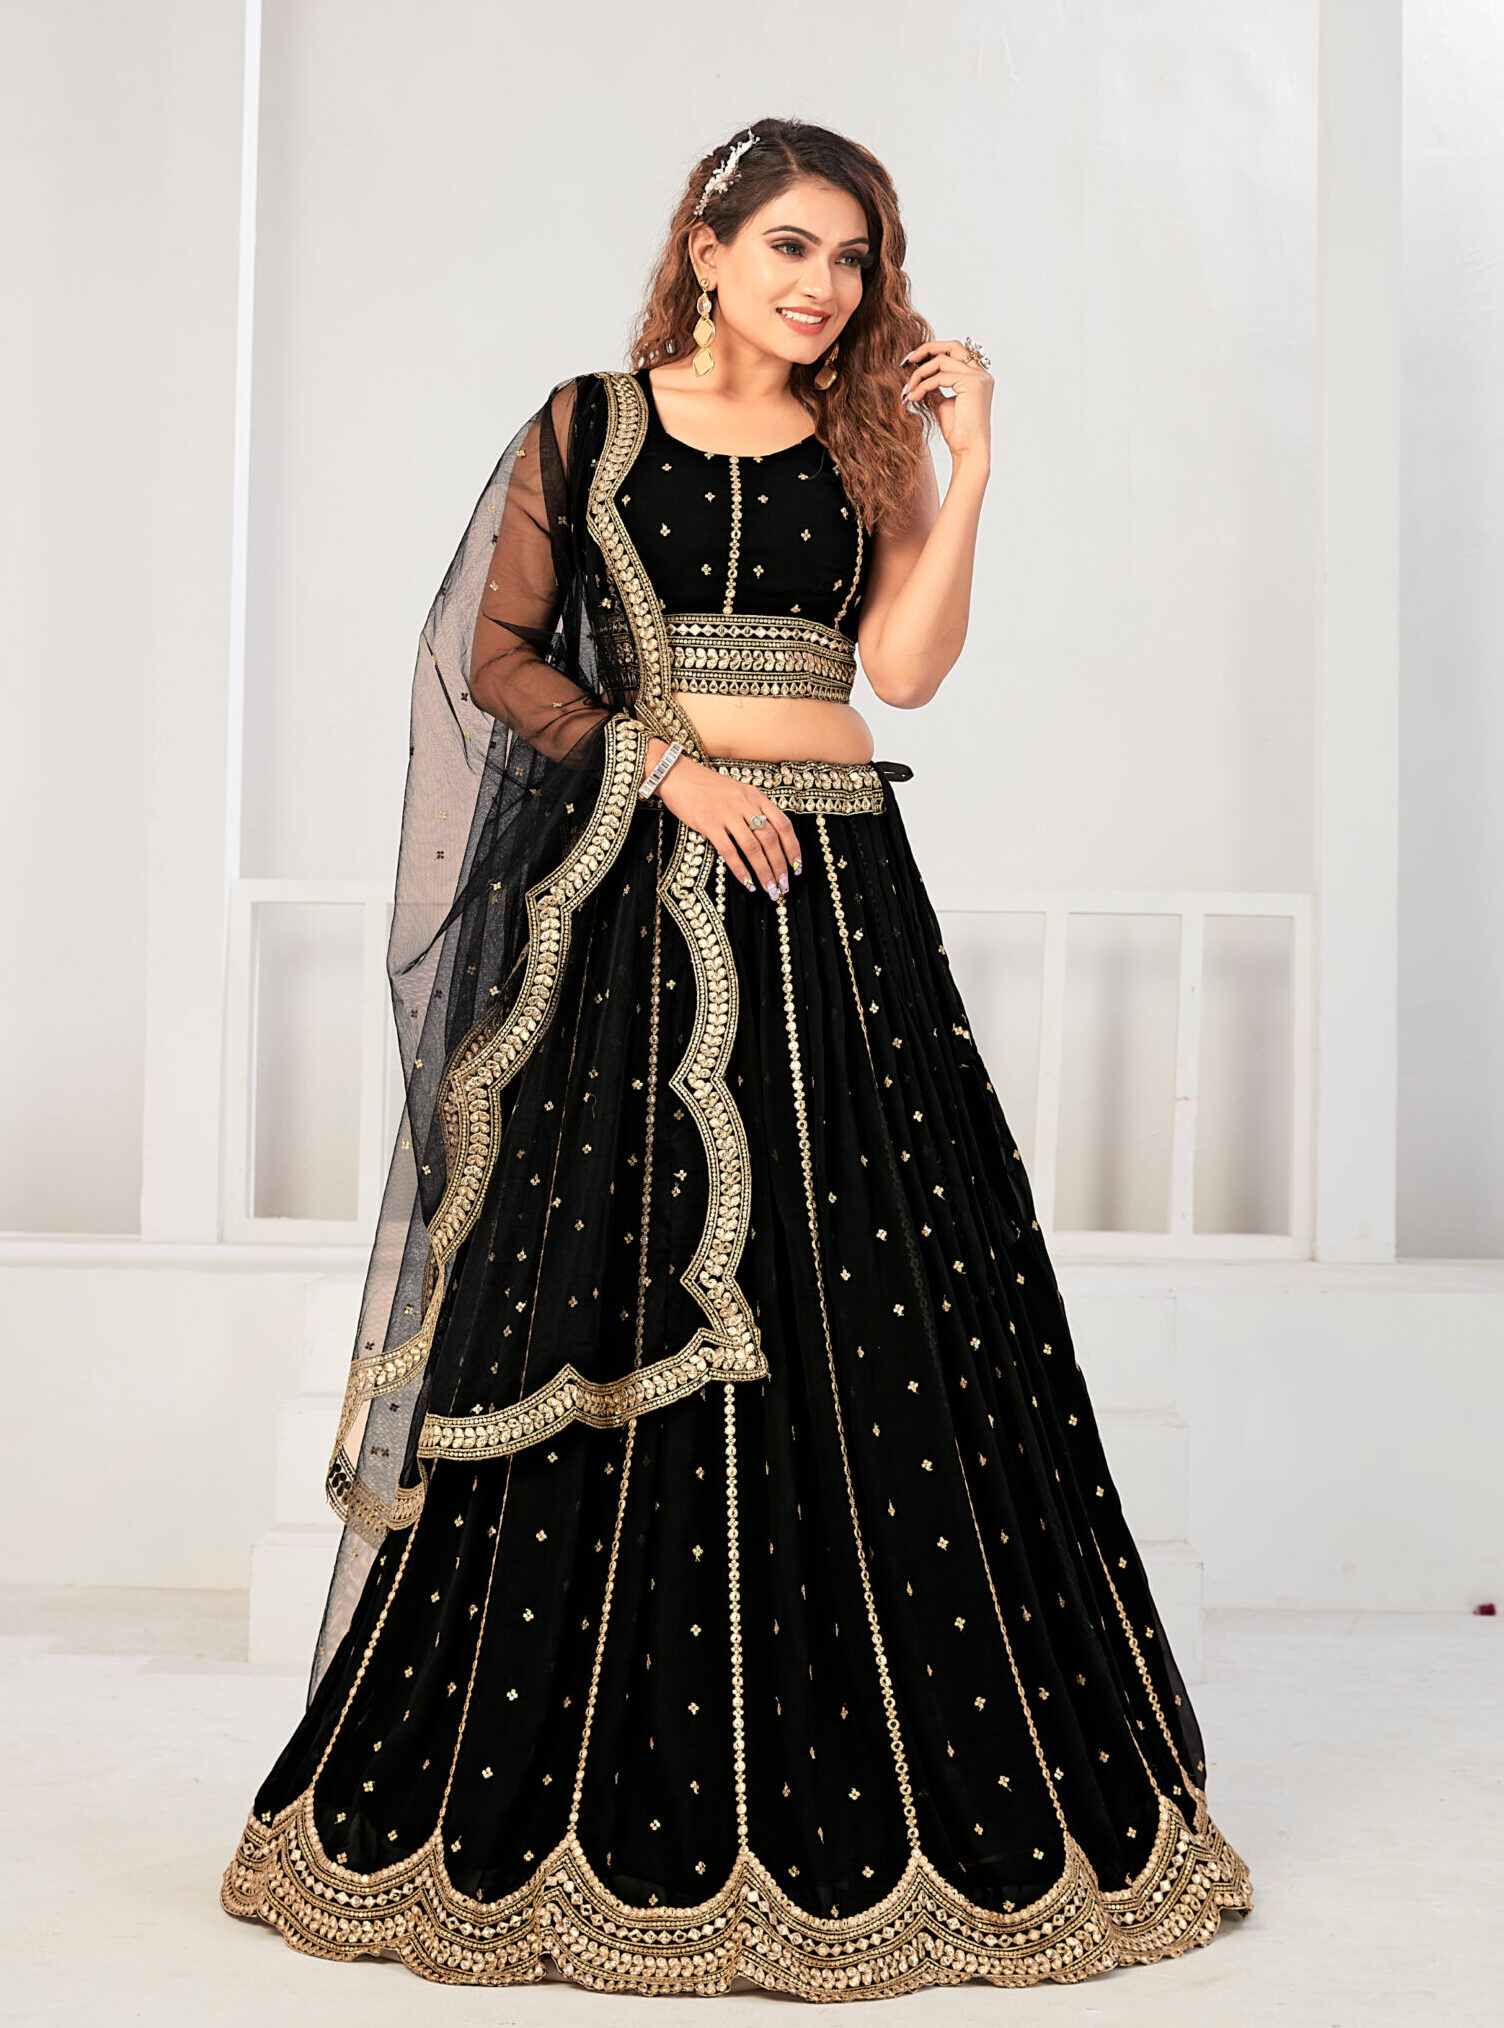 Bridal Wear | Bridal Lehenga | Wedding Half sarees in Chennai | Half saree  designs, Wedding lehenga designs, Stylish dresses